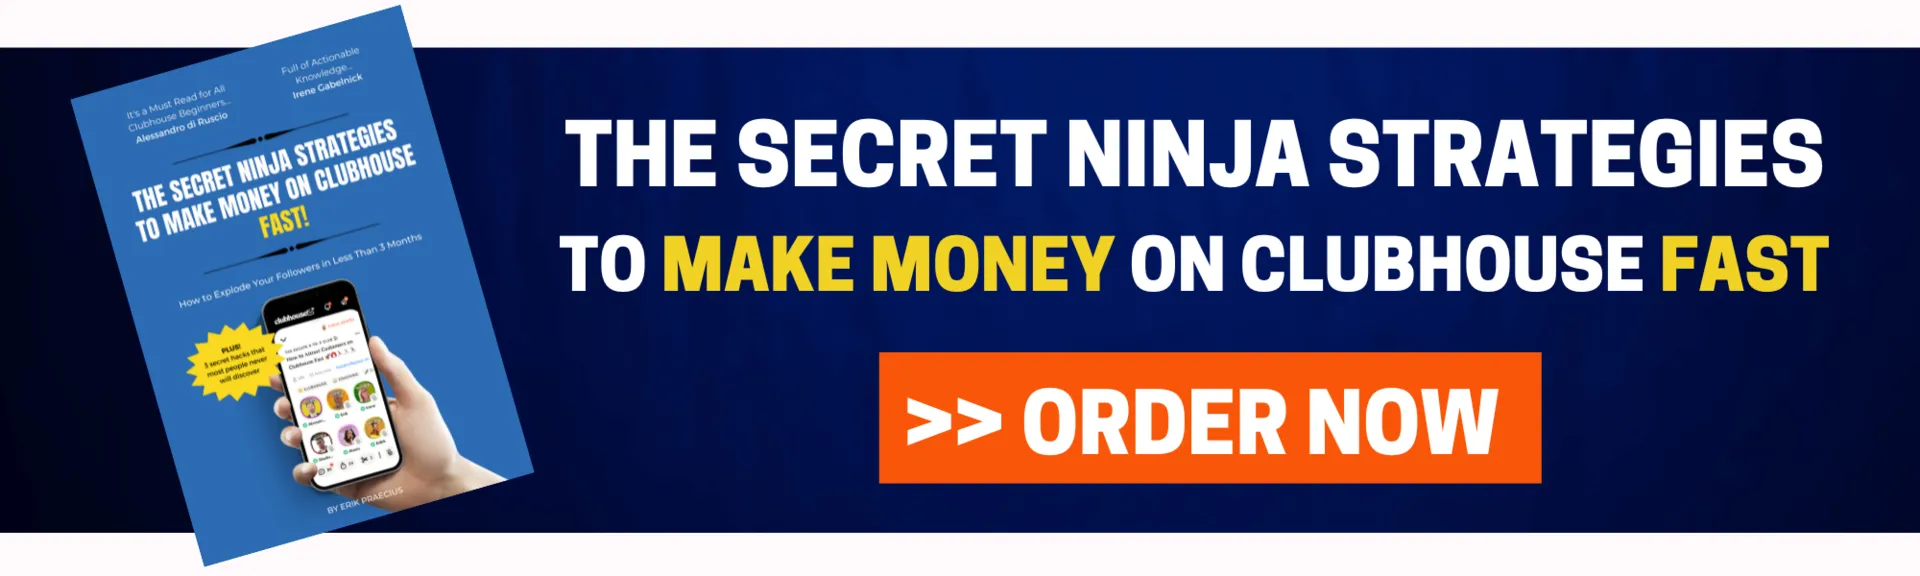 The Secret Ninja Strategies to Make Money on Clubhouse Fast